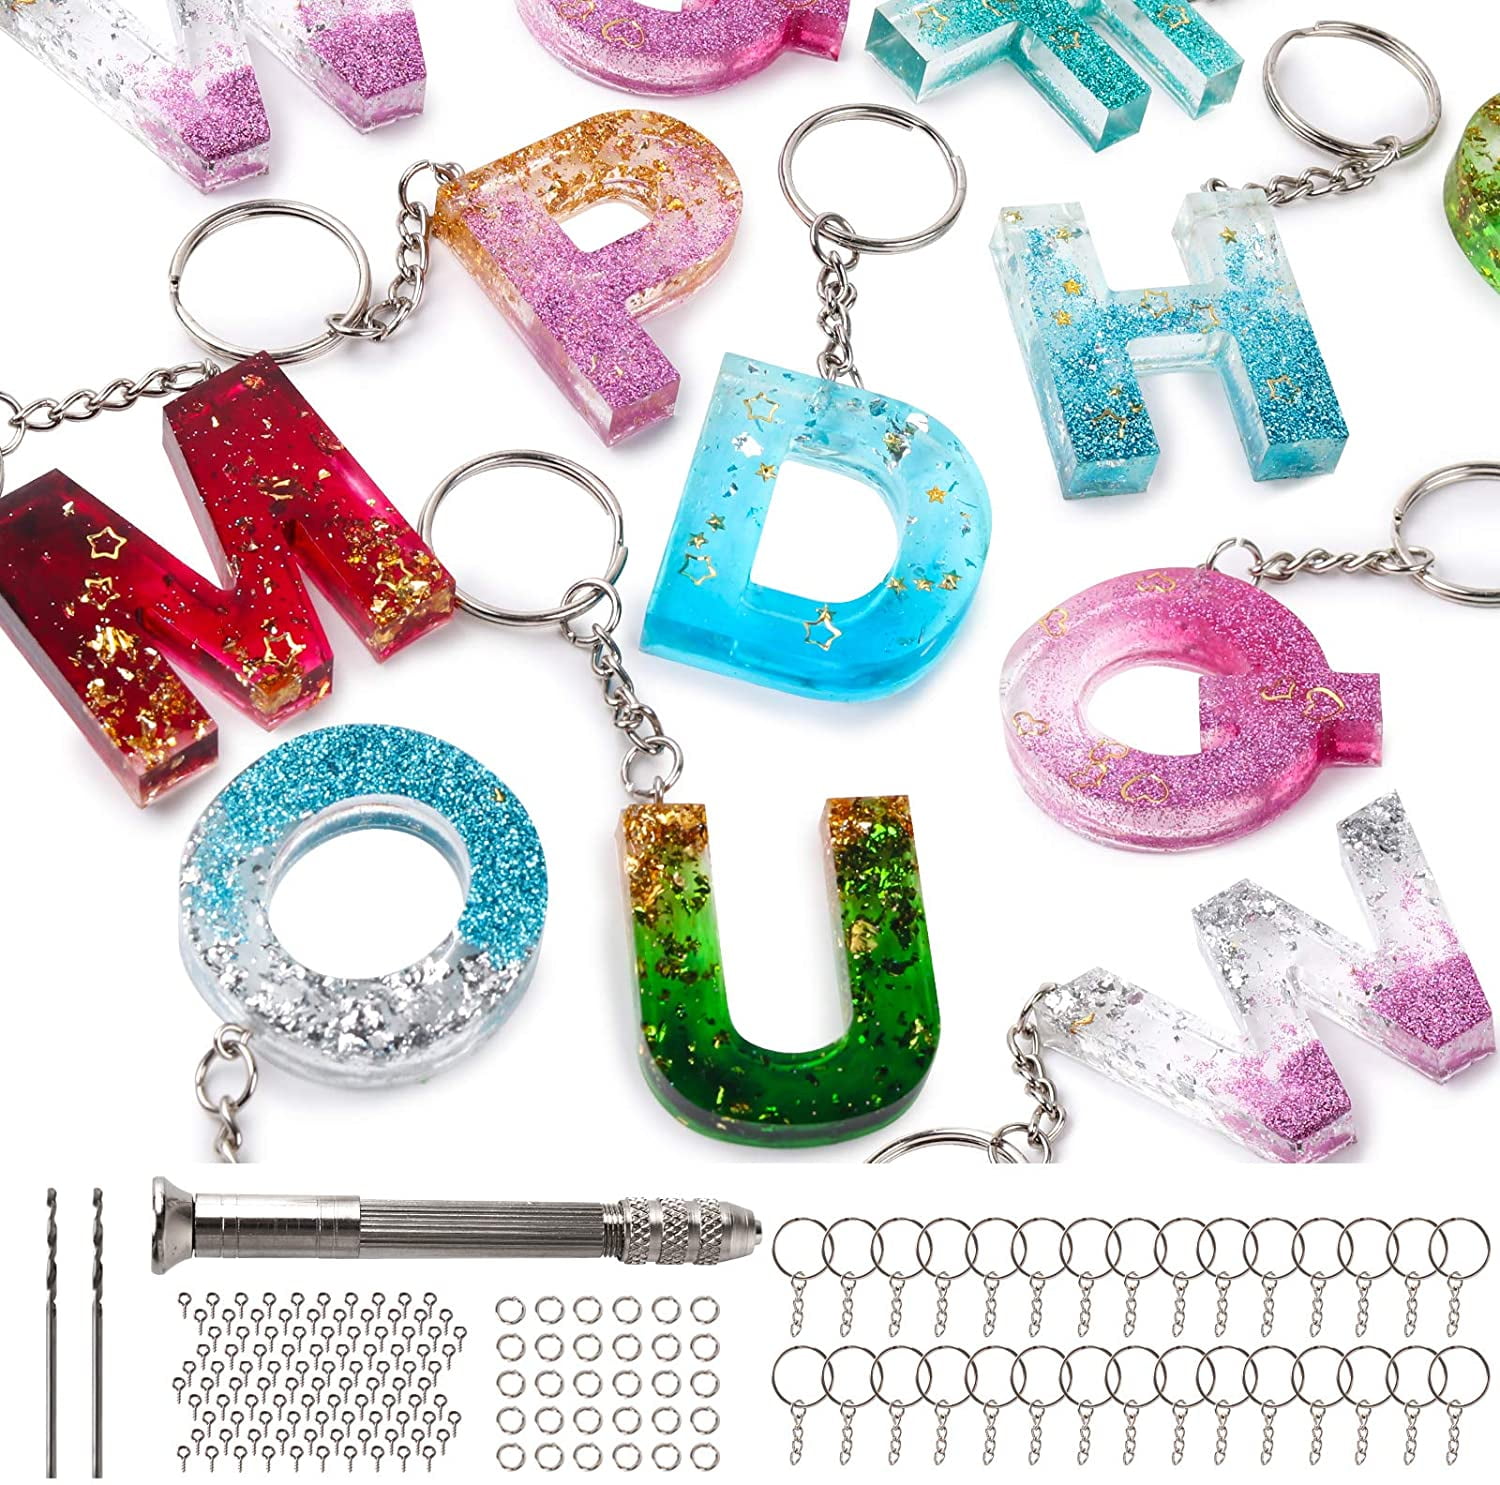 Capital Letter Pendant Keychain Craft Crystal DIY Handmade Number Moulds Alphabet Silicone Molds Silica Gel Letter Resin Molds 